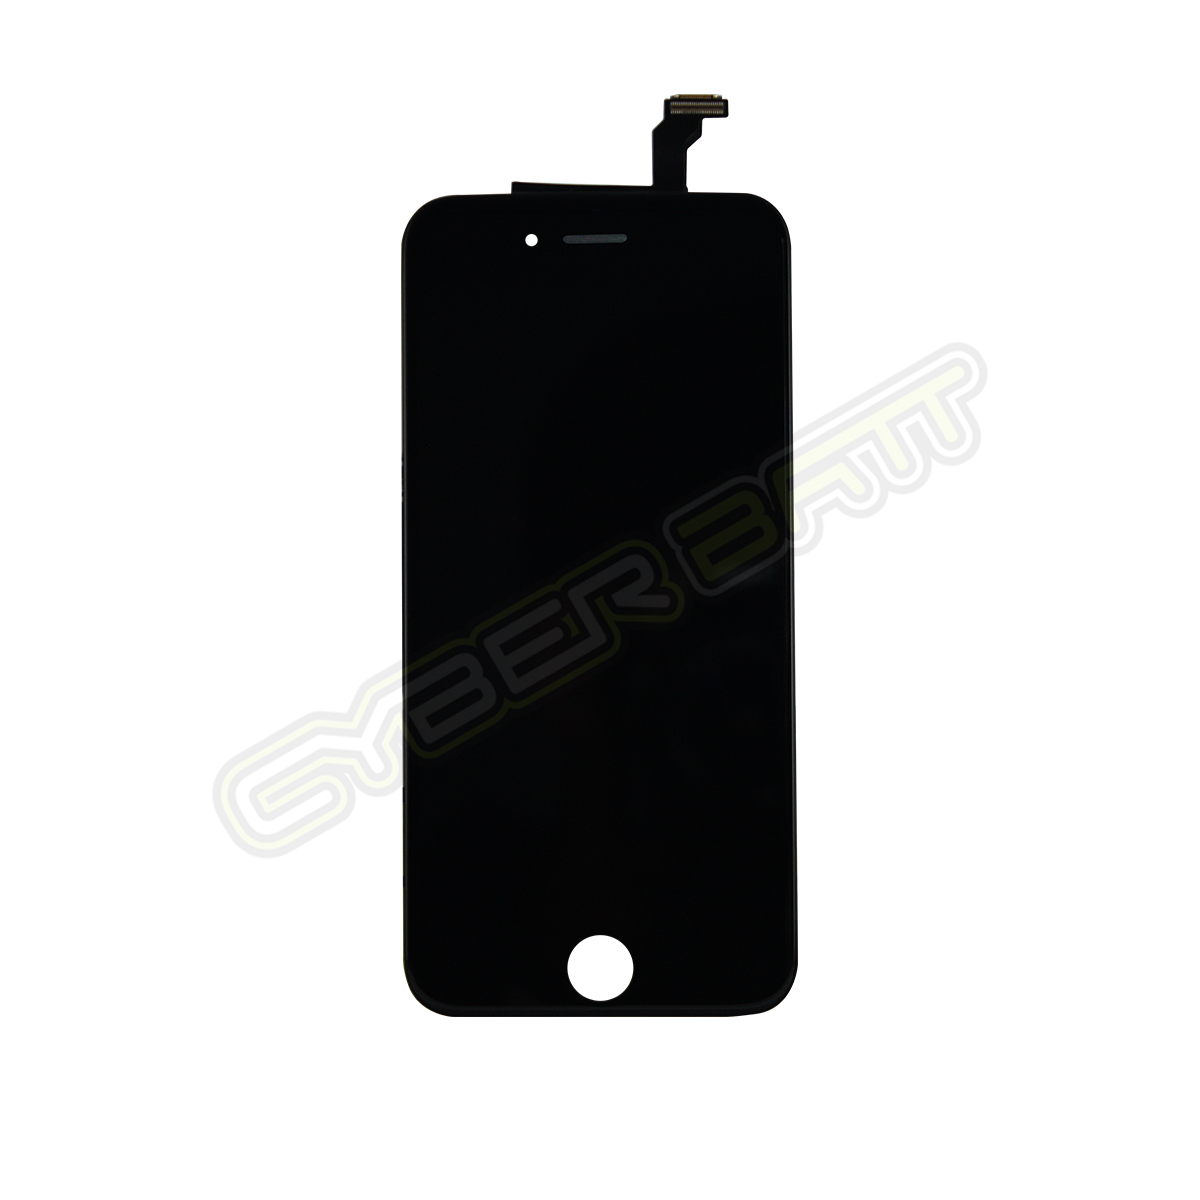 iPhone 5 LCD Black หน้าจอไอโฟน 5 สีดำ